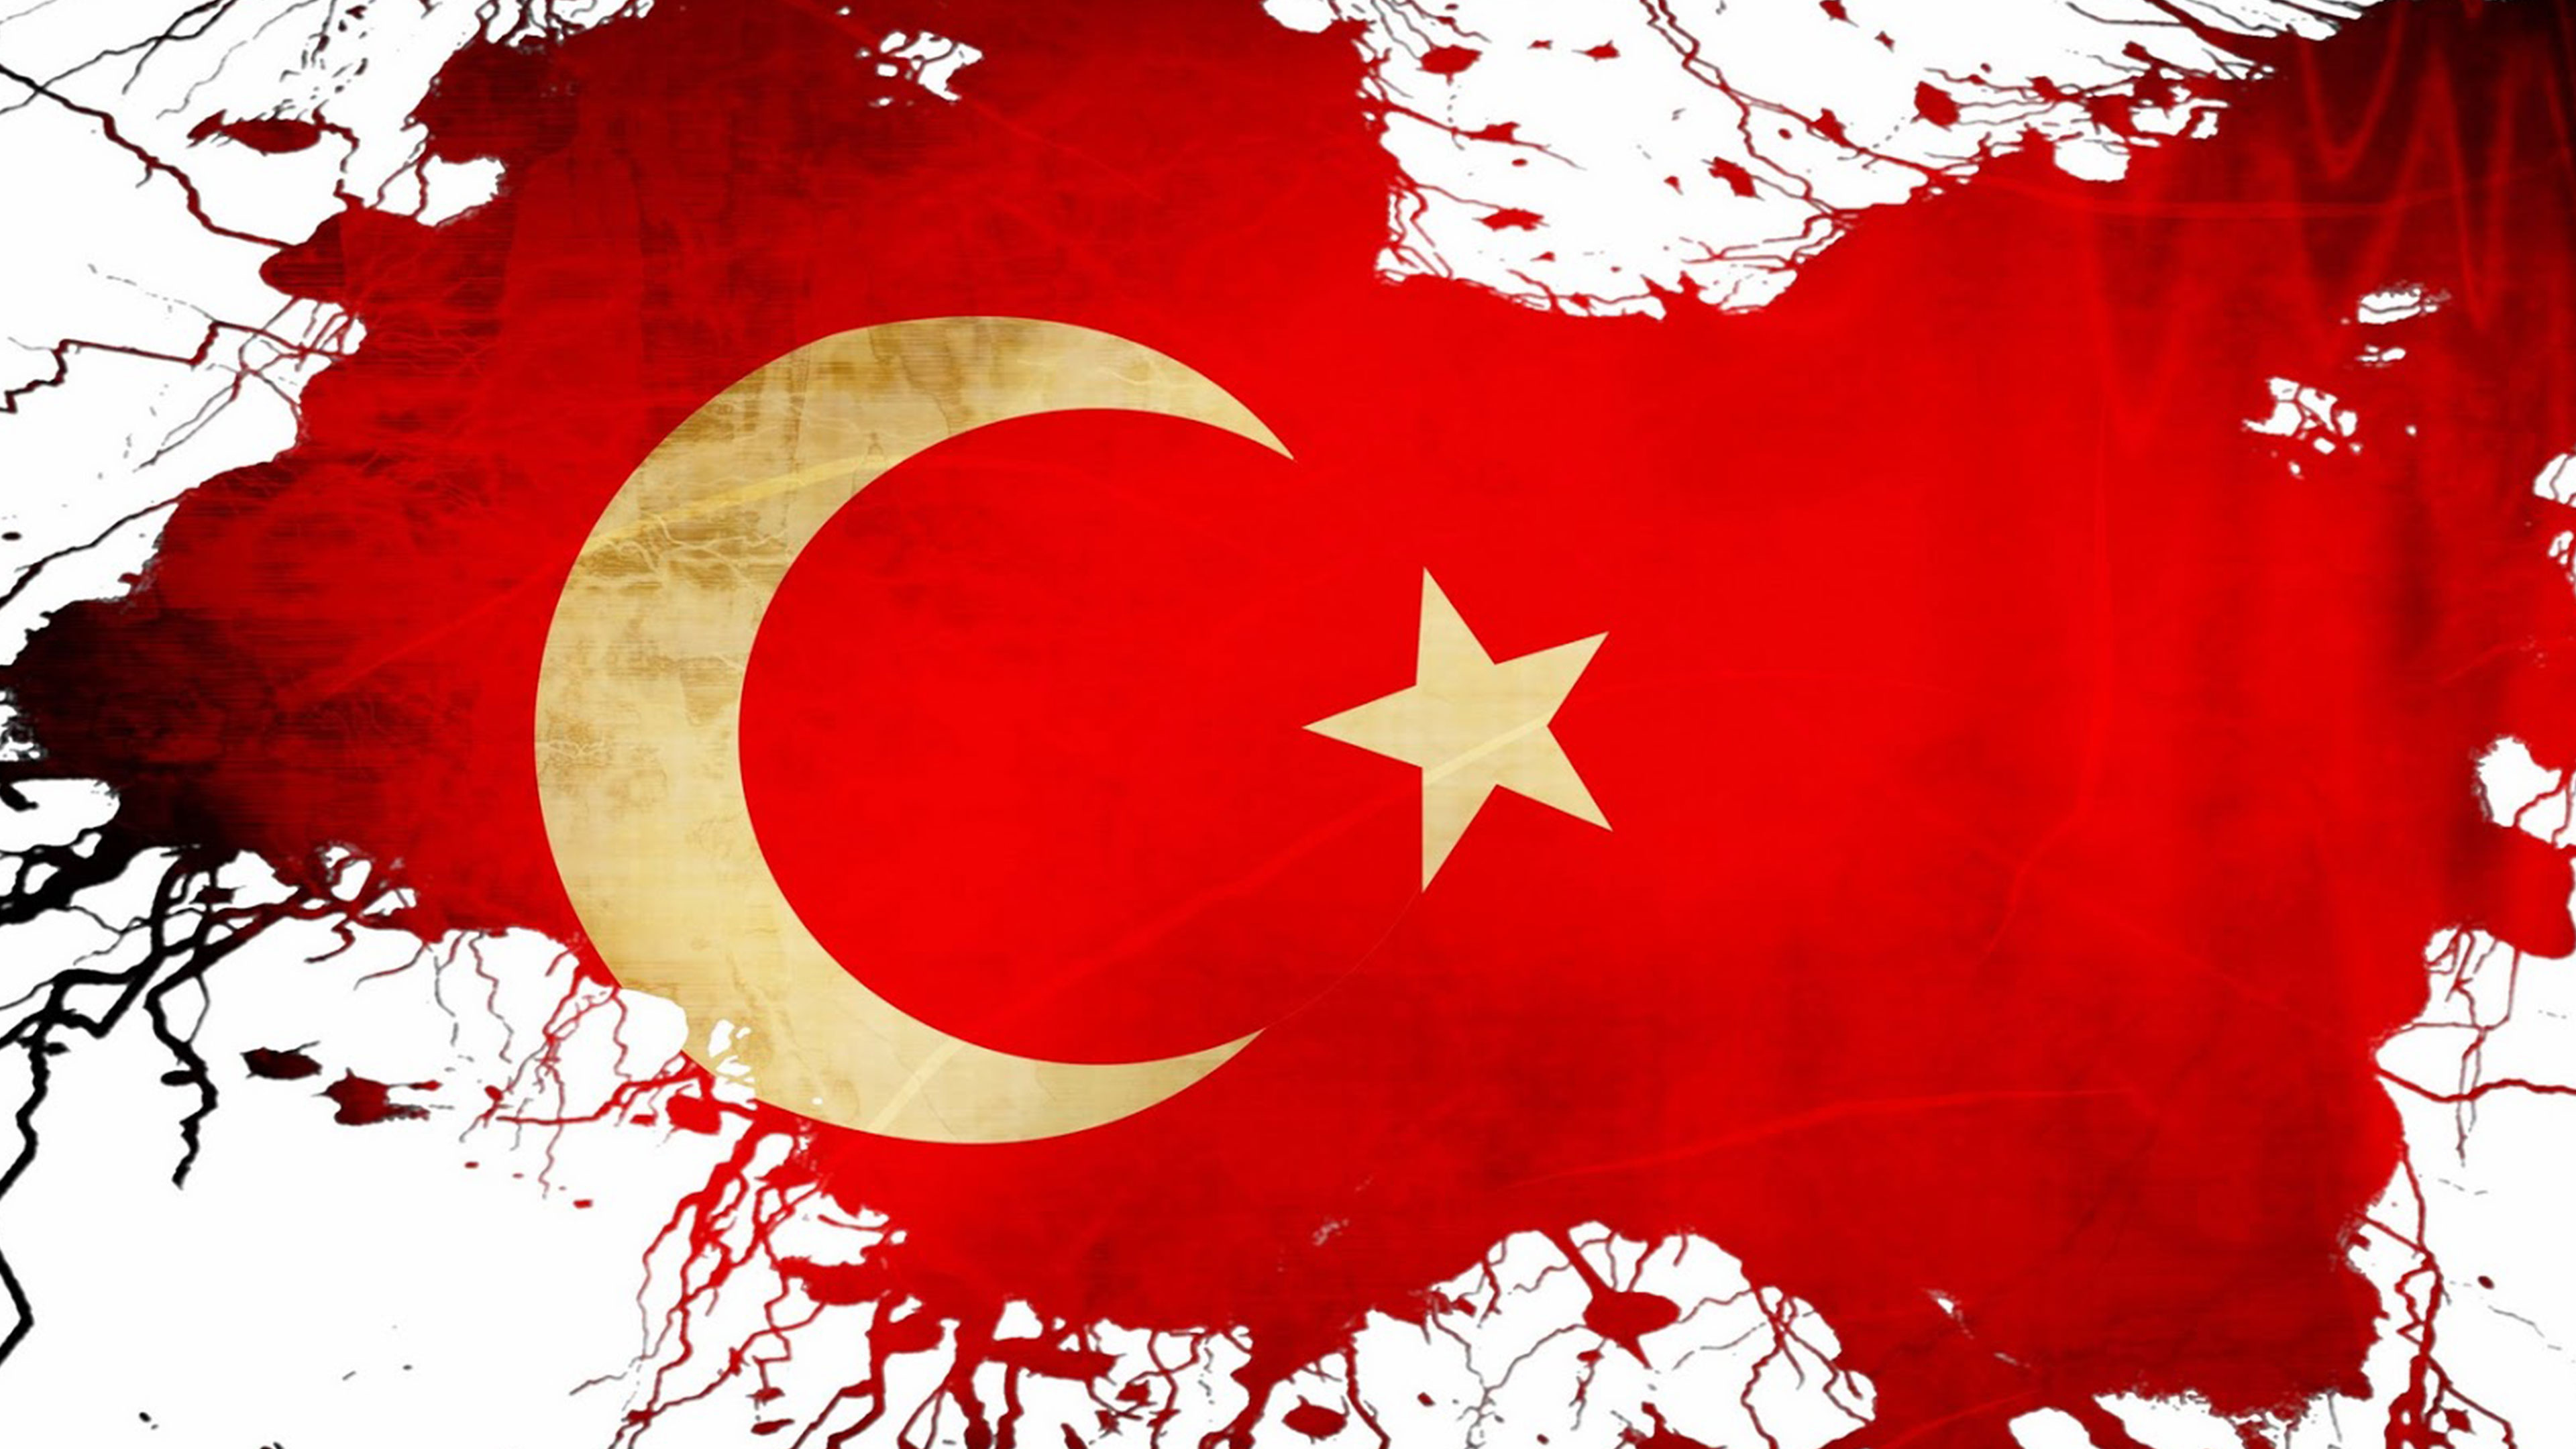 4k ultrahd turk bayraklari resimleri 8